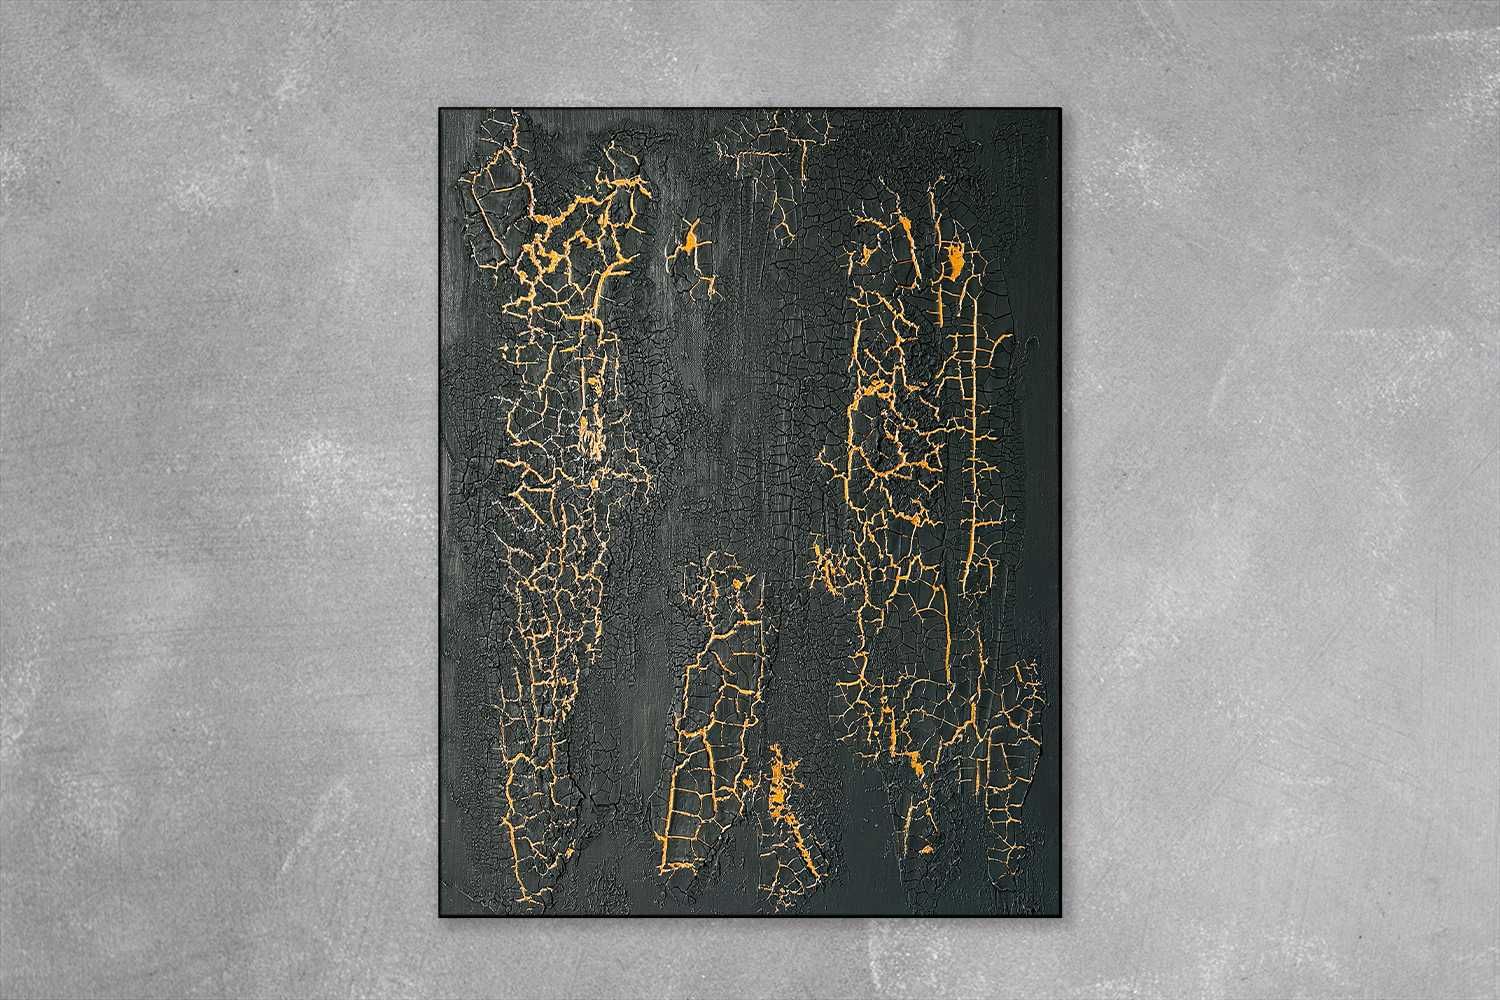 Tablou Abstract cu textura aurie pe negru 70cm x 50cm